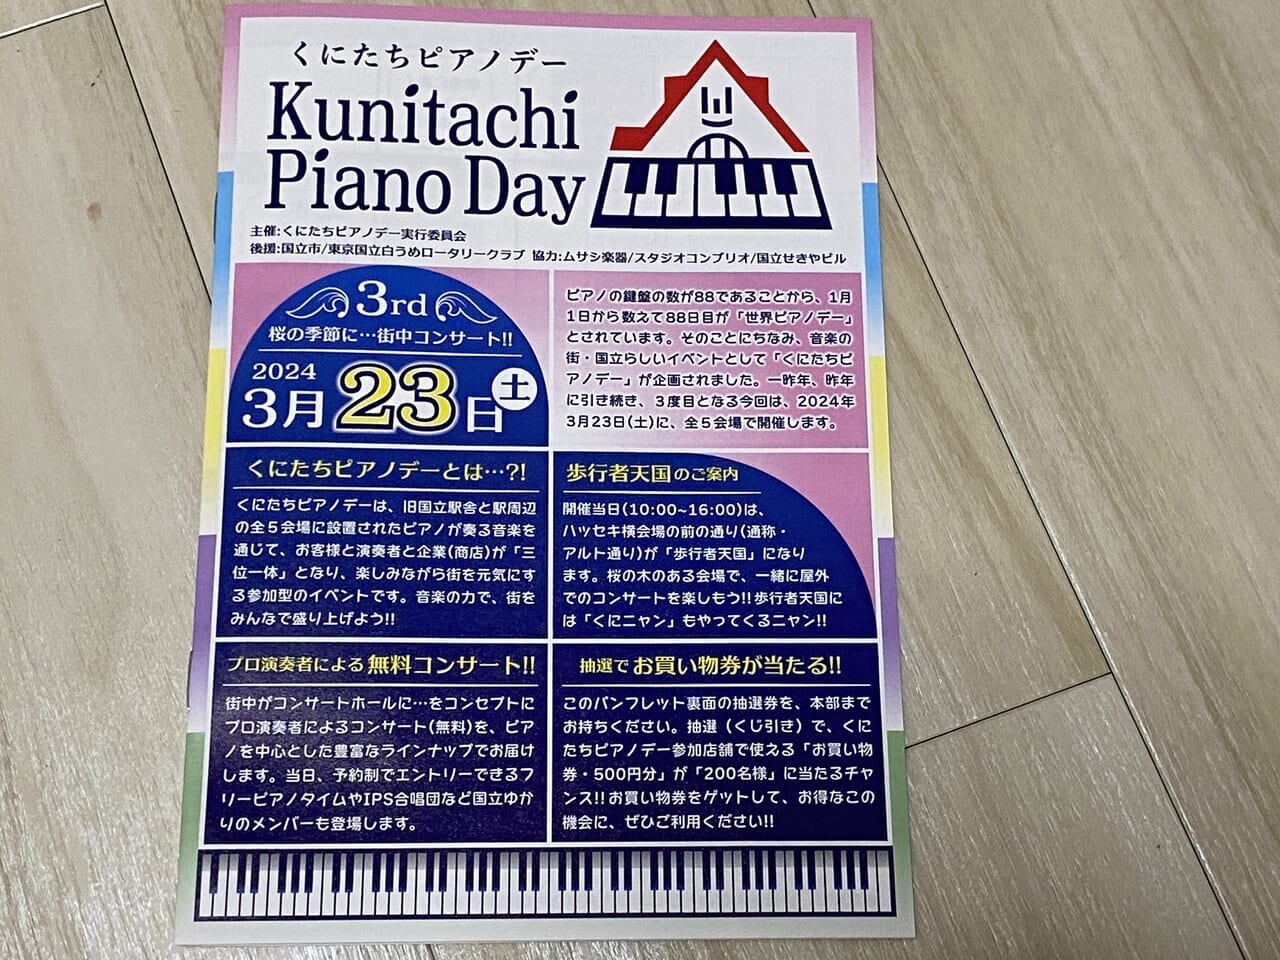 Kunitachi Piano Day